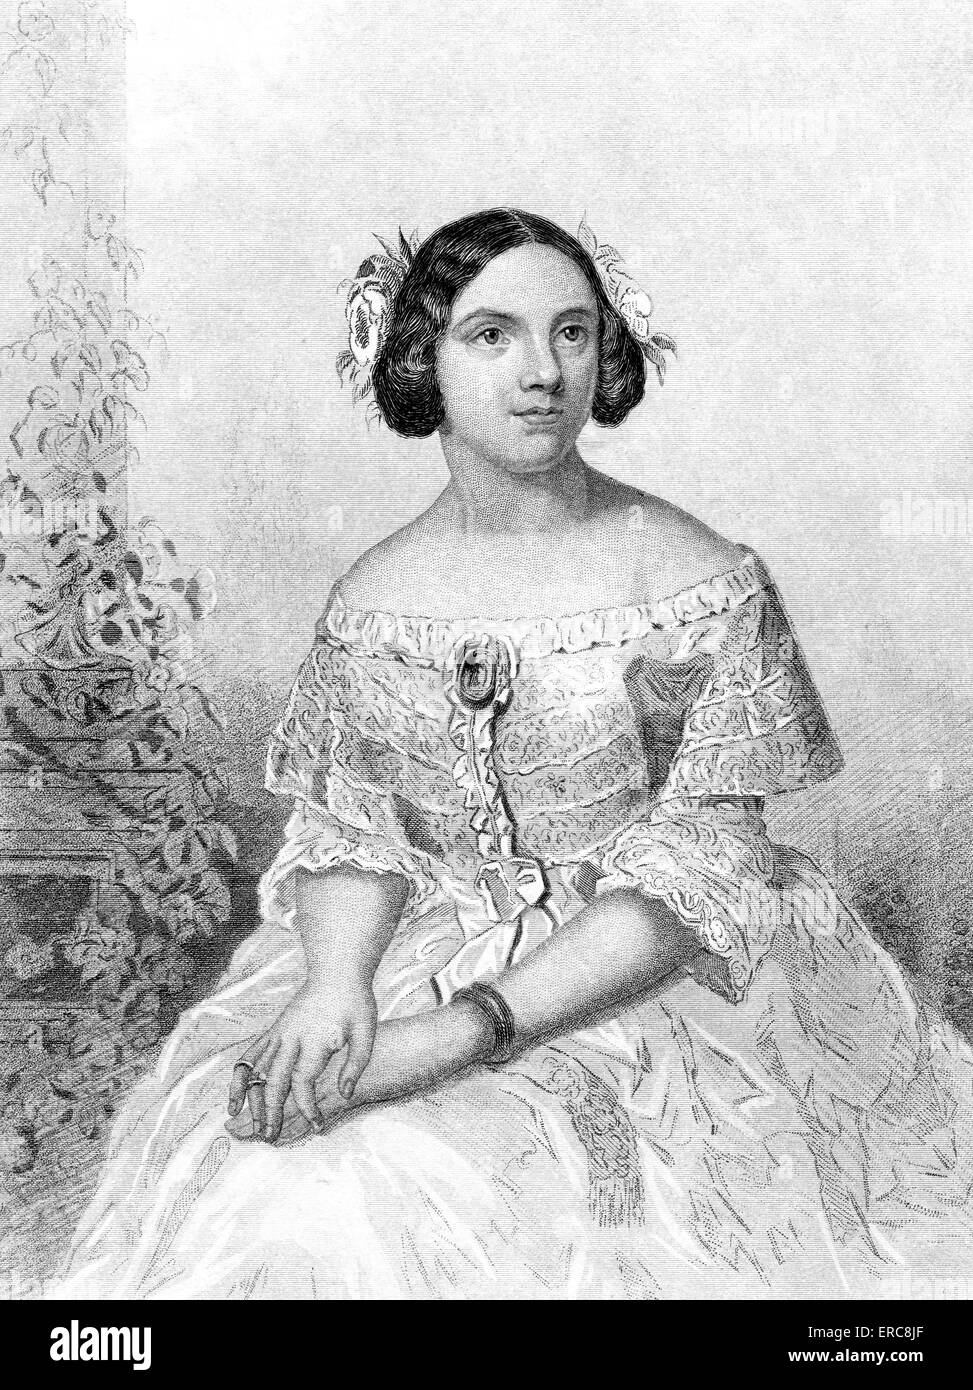 1850s PORTRAIT OF JENNY LIND THE SWEDISH NIGHTINGALE SOPRANO OPERA SINGER Stock Photo